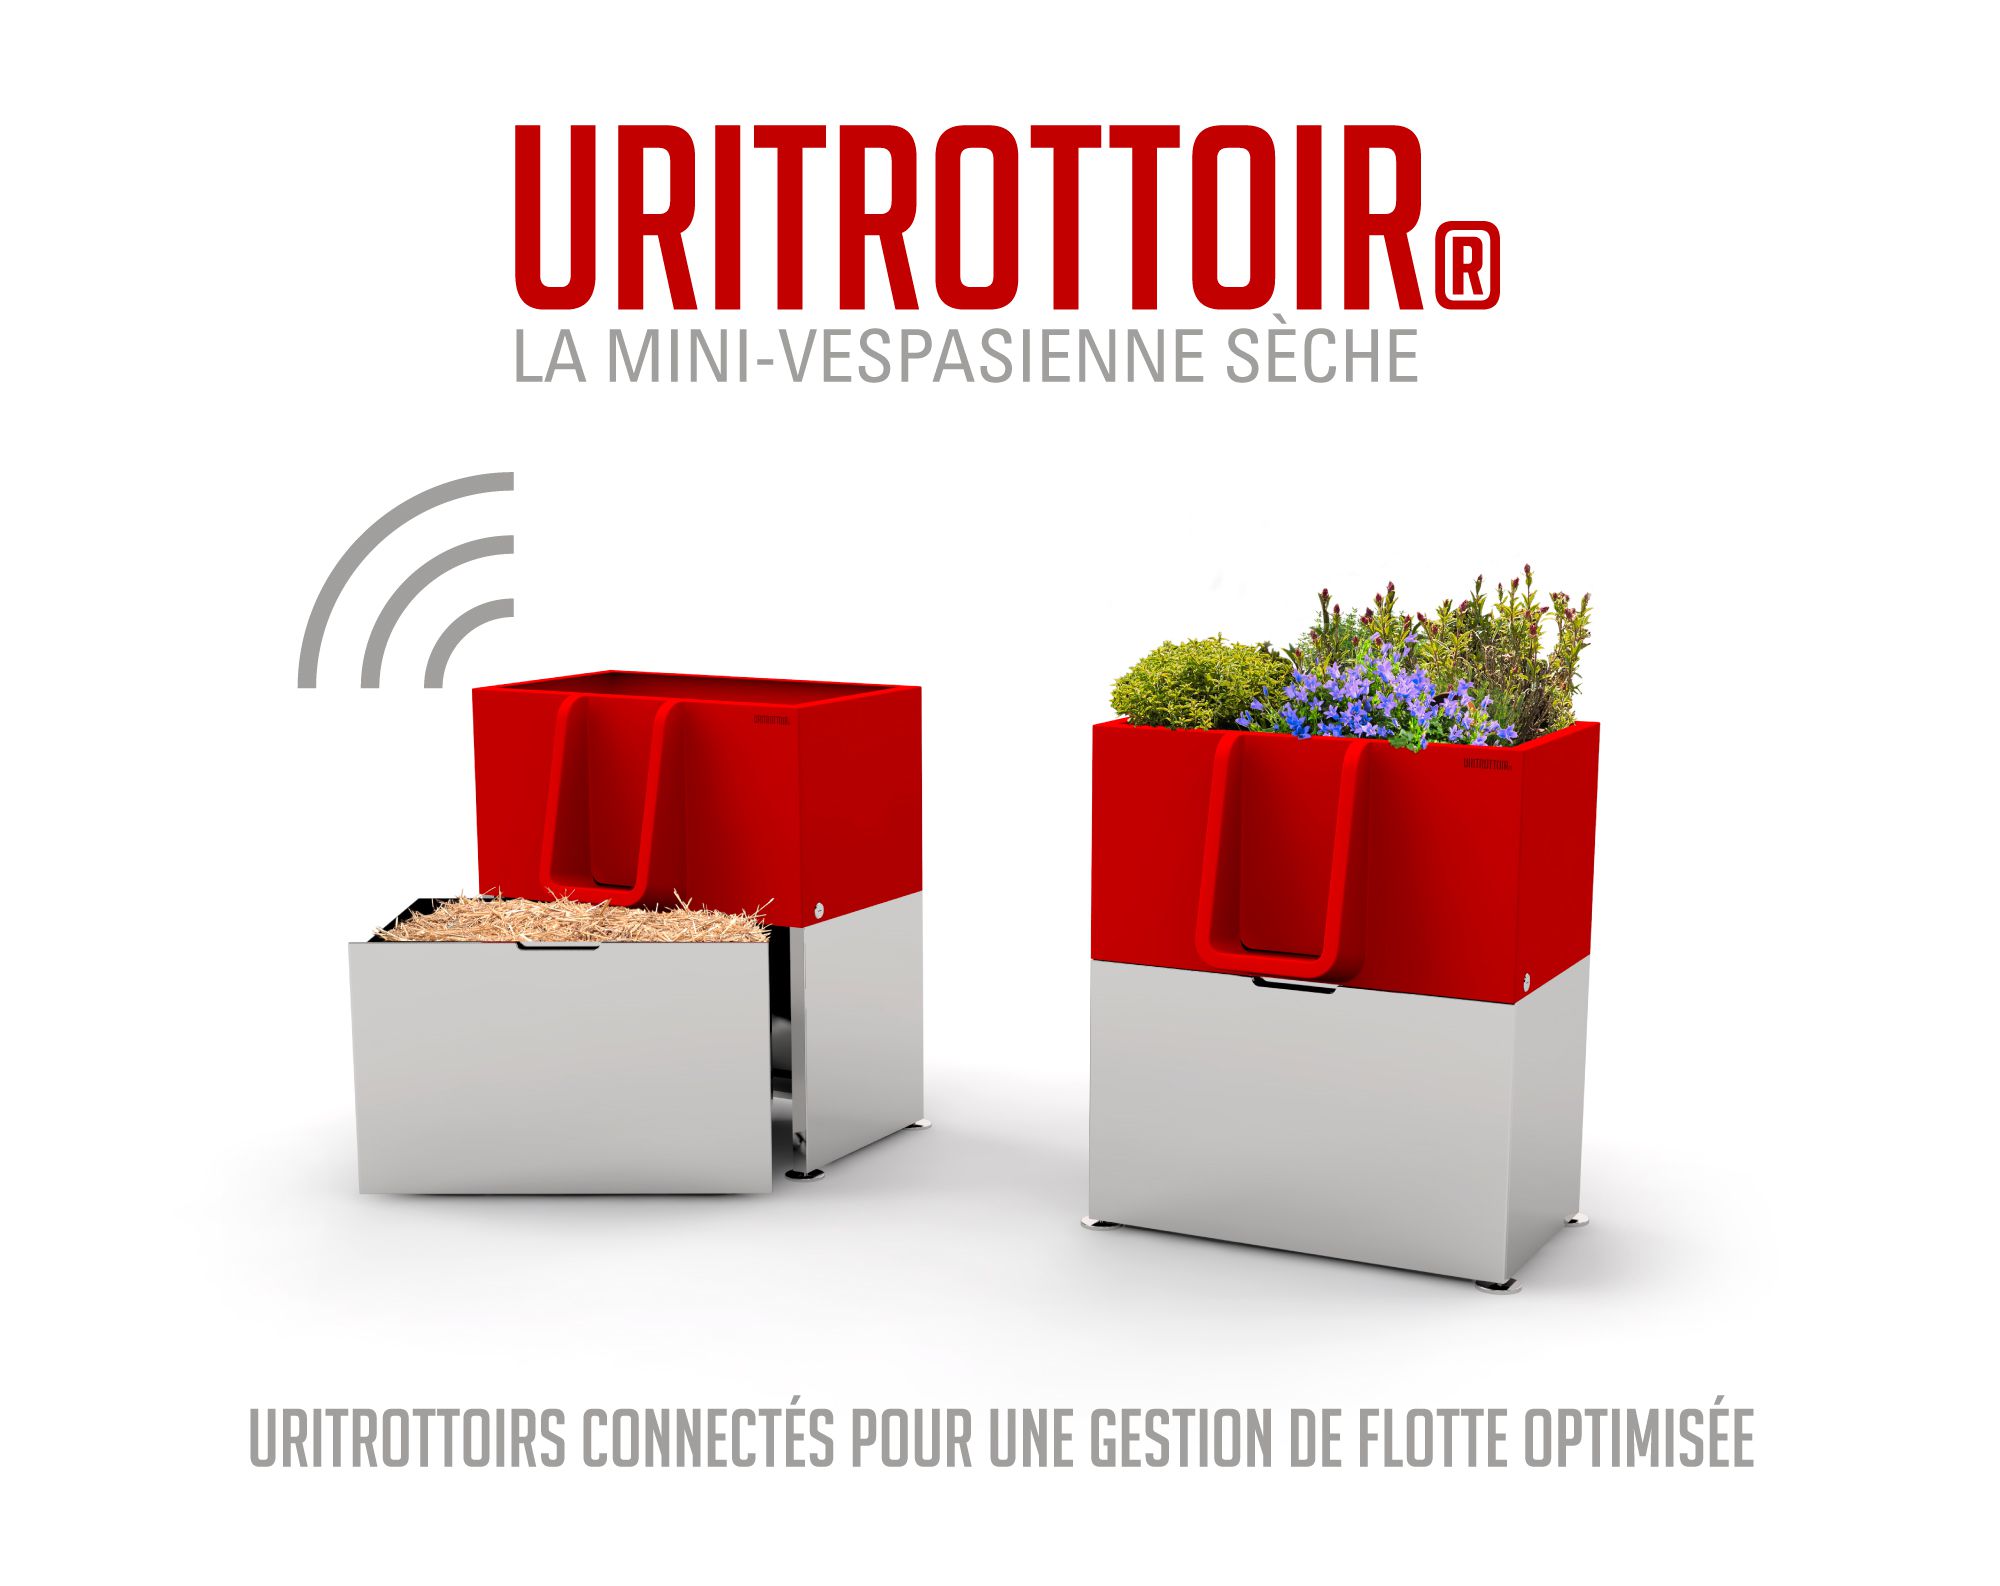 Uritrottoir, plant-topped无水公共便池概念来自法国。